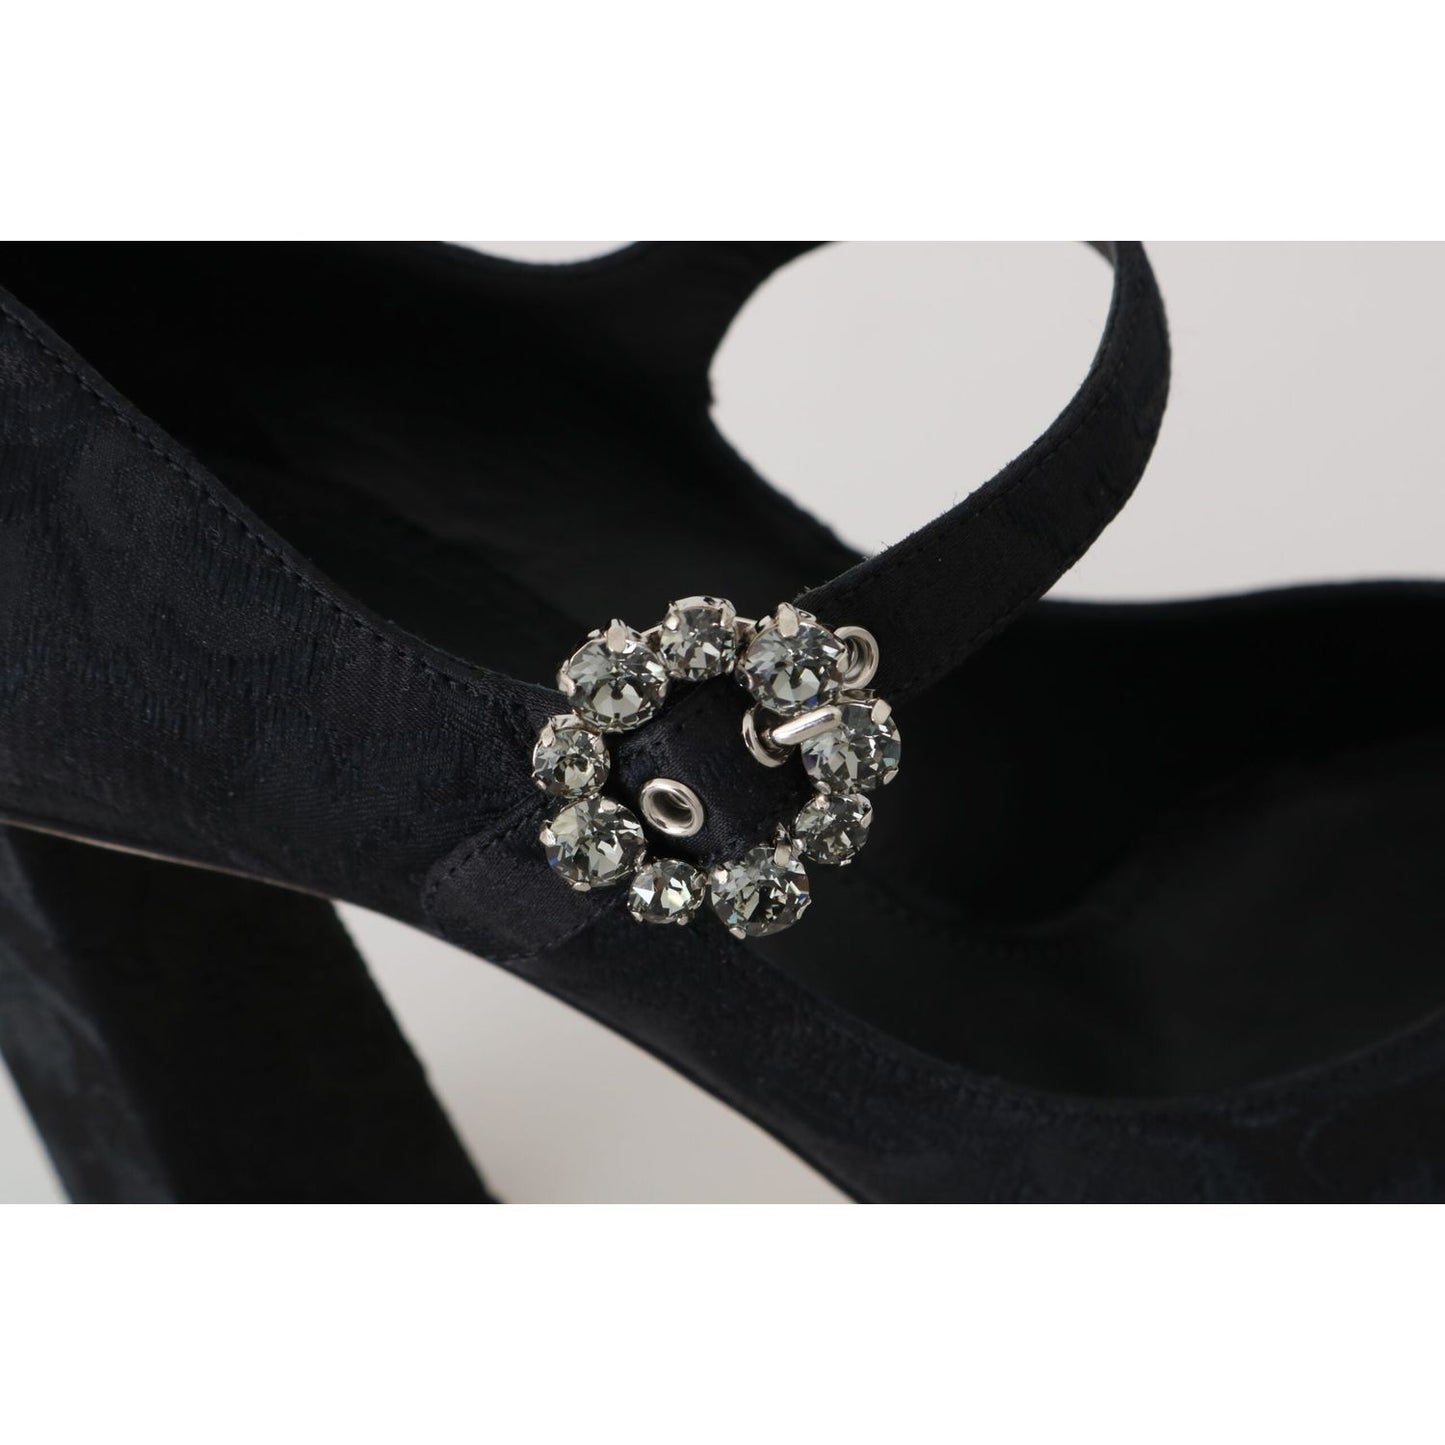 Dolce & Gabbana Elegant Black Crystal Brocade Pumps black-brocade-high-heels-mary-janes-shoes